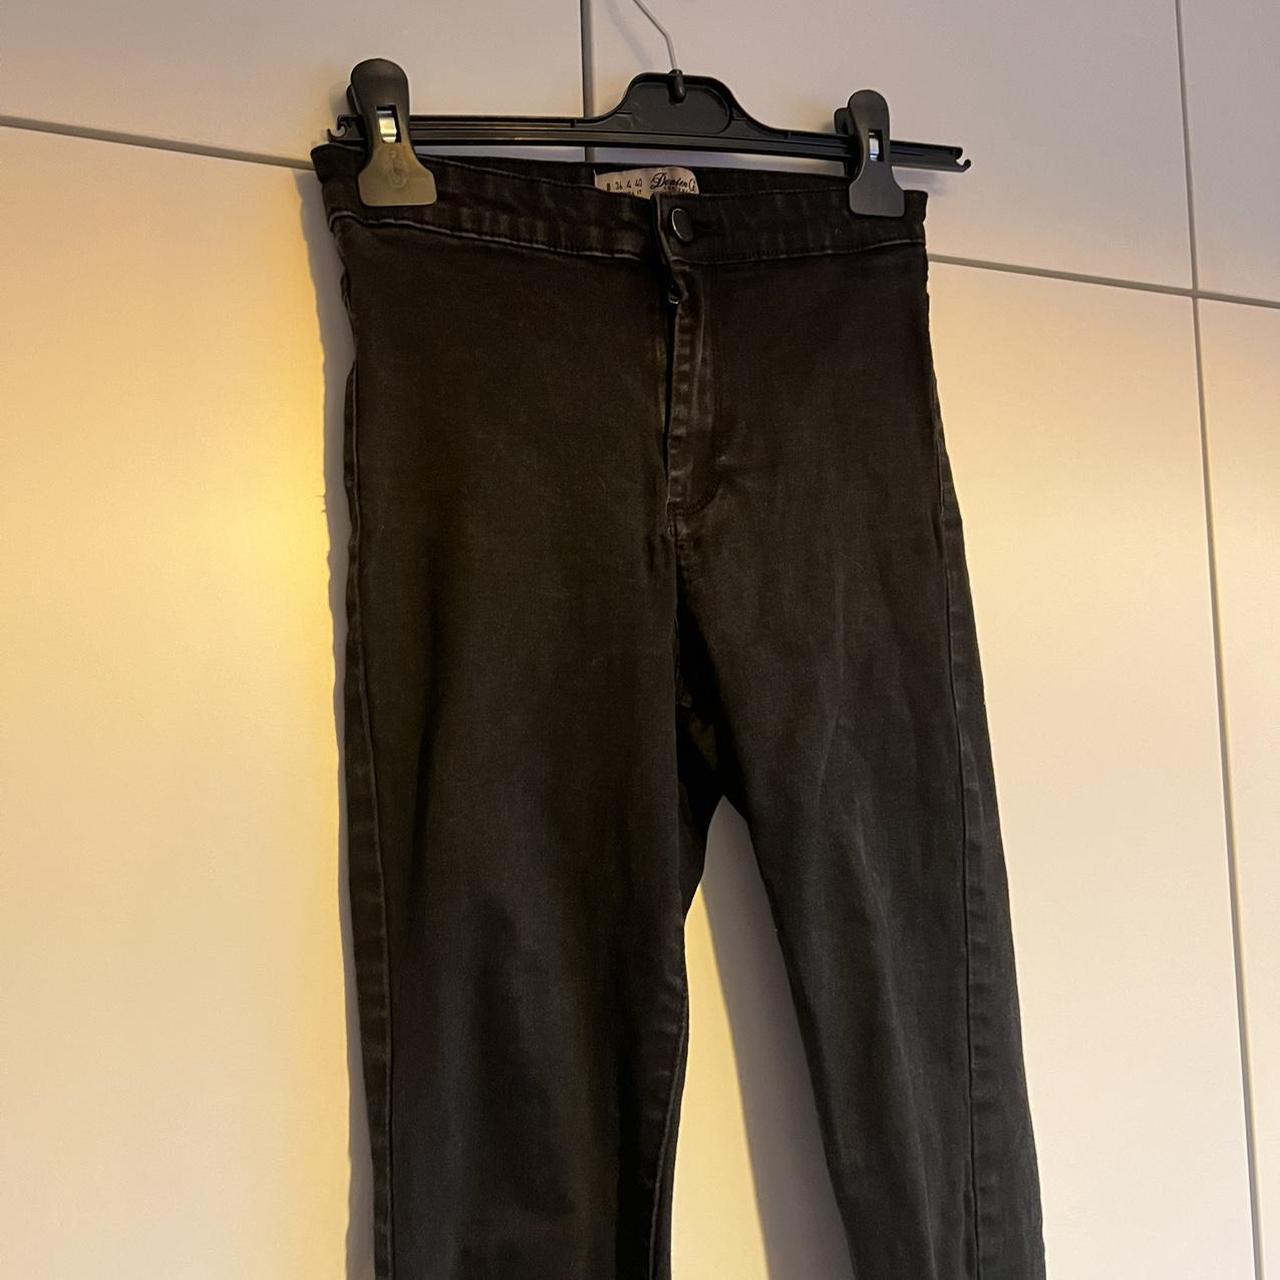 Black skinny jeans Size 8 - would fit a size 10 - Depop